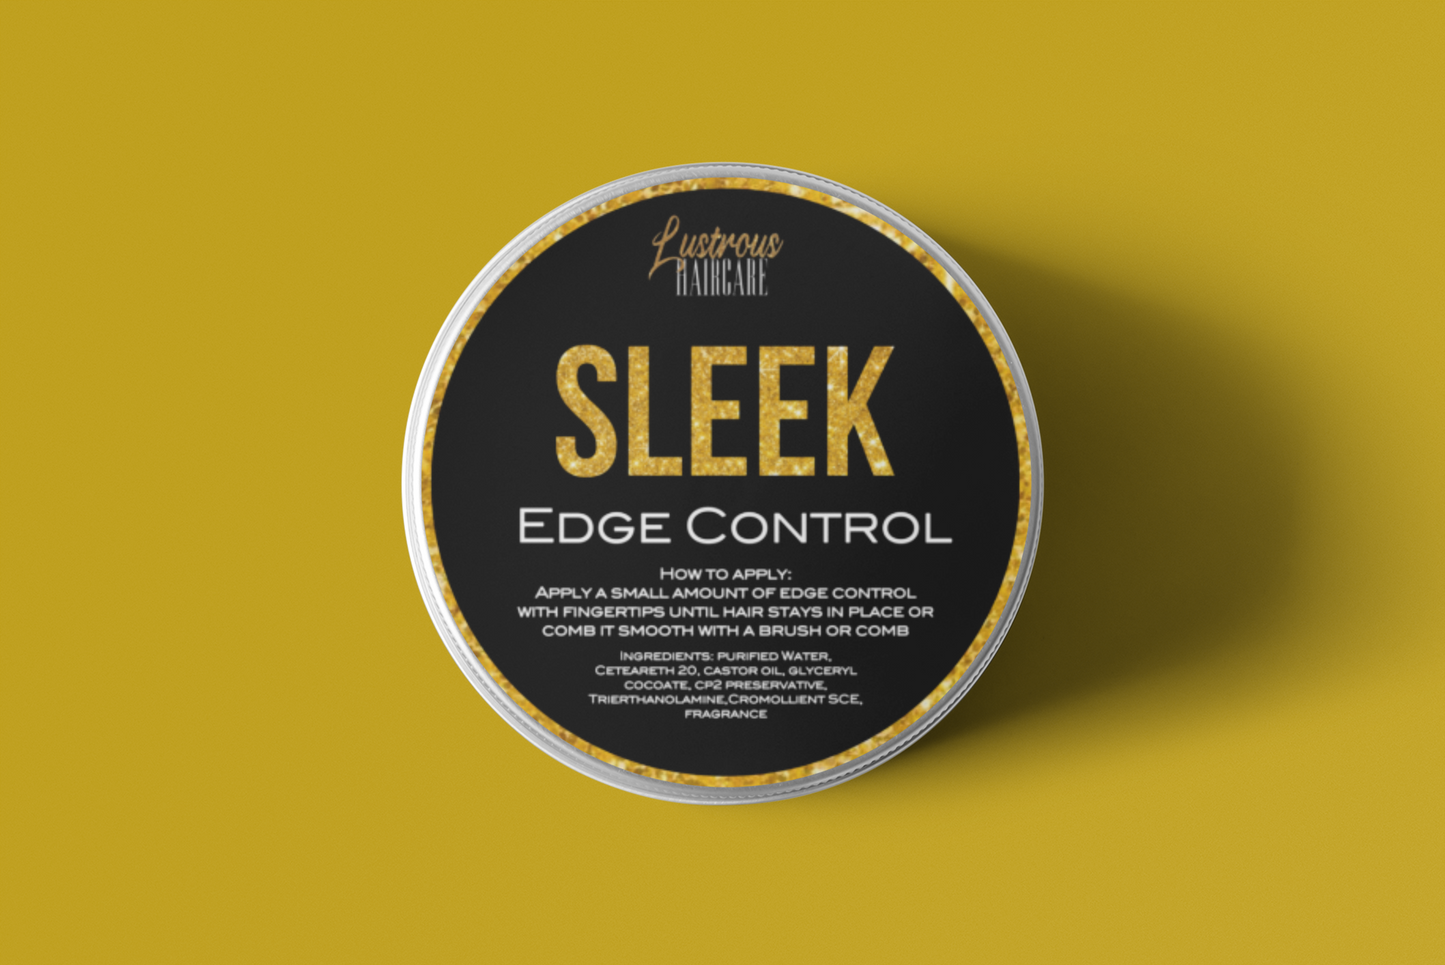 Edge Control Label